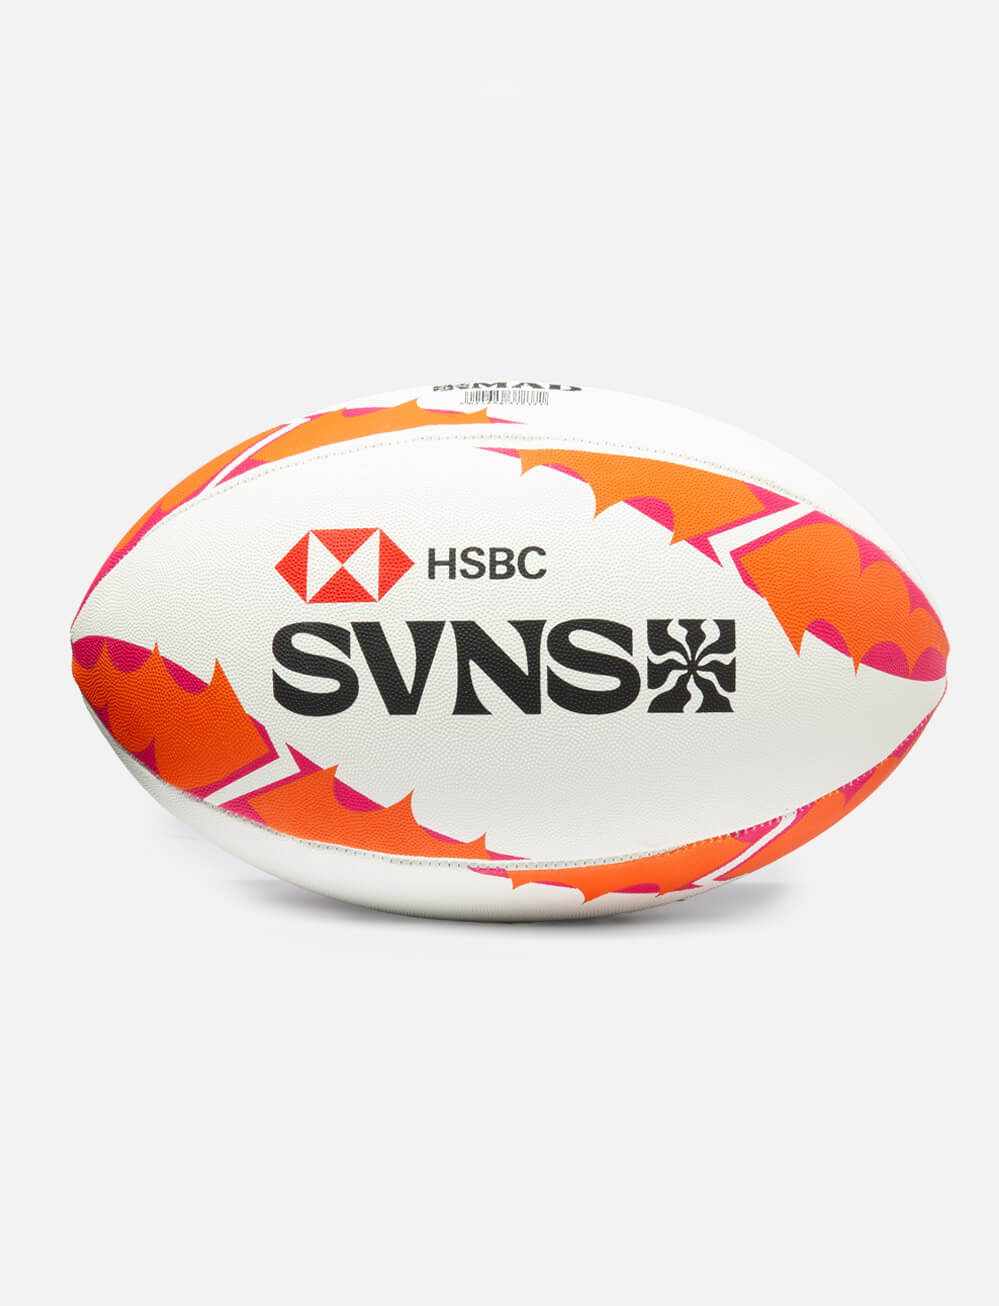 HSBC SVNS Official Merchandise